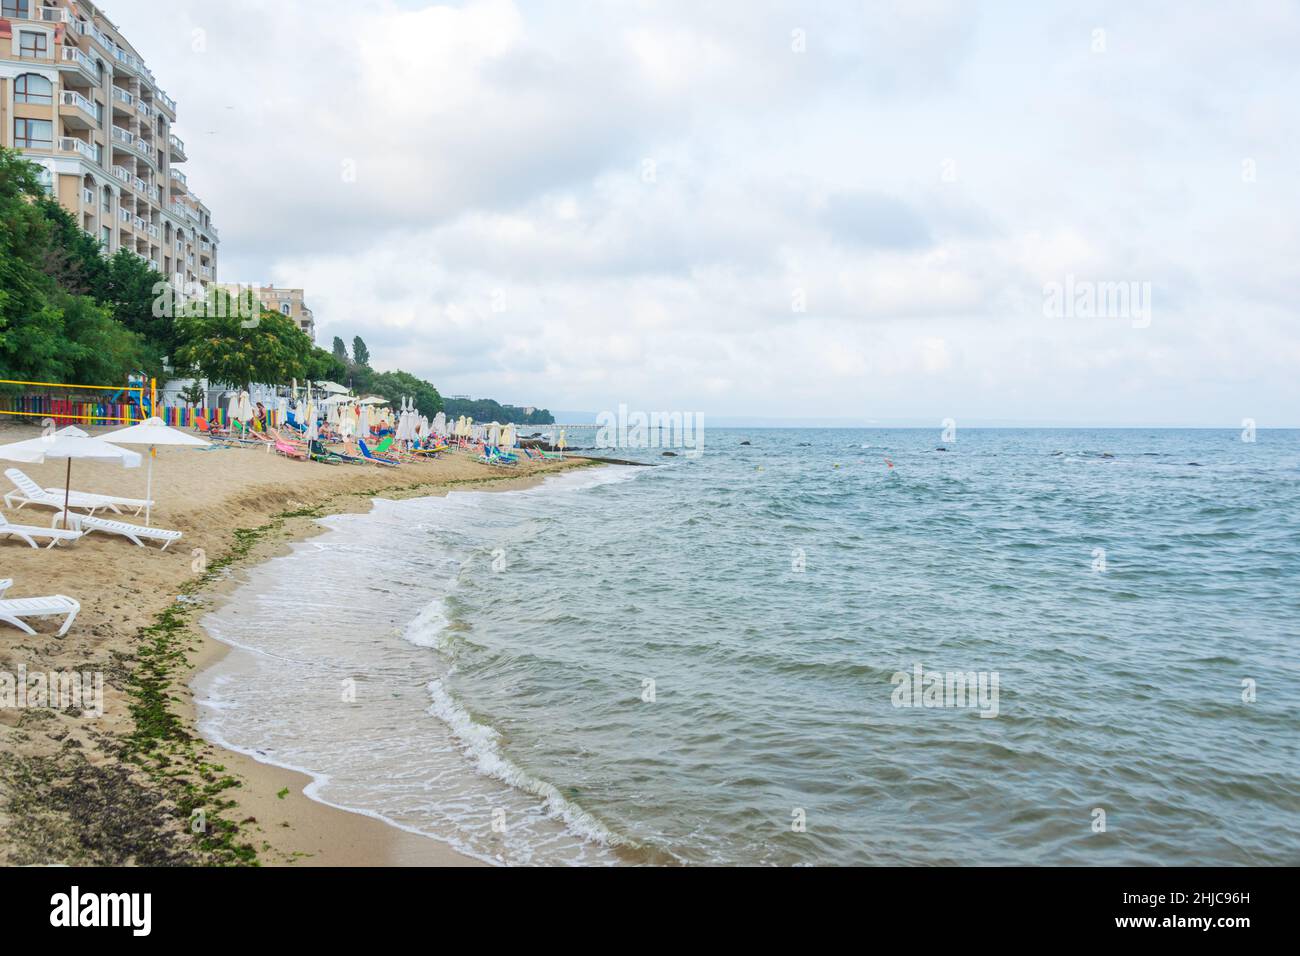 The Black Sea beach with hotels in Varna, Bulgaria Stock Photo